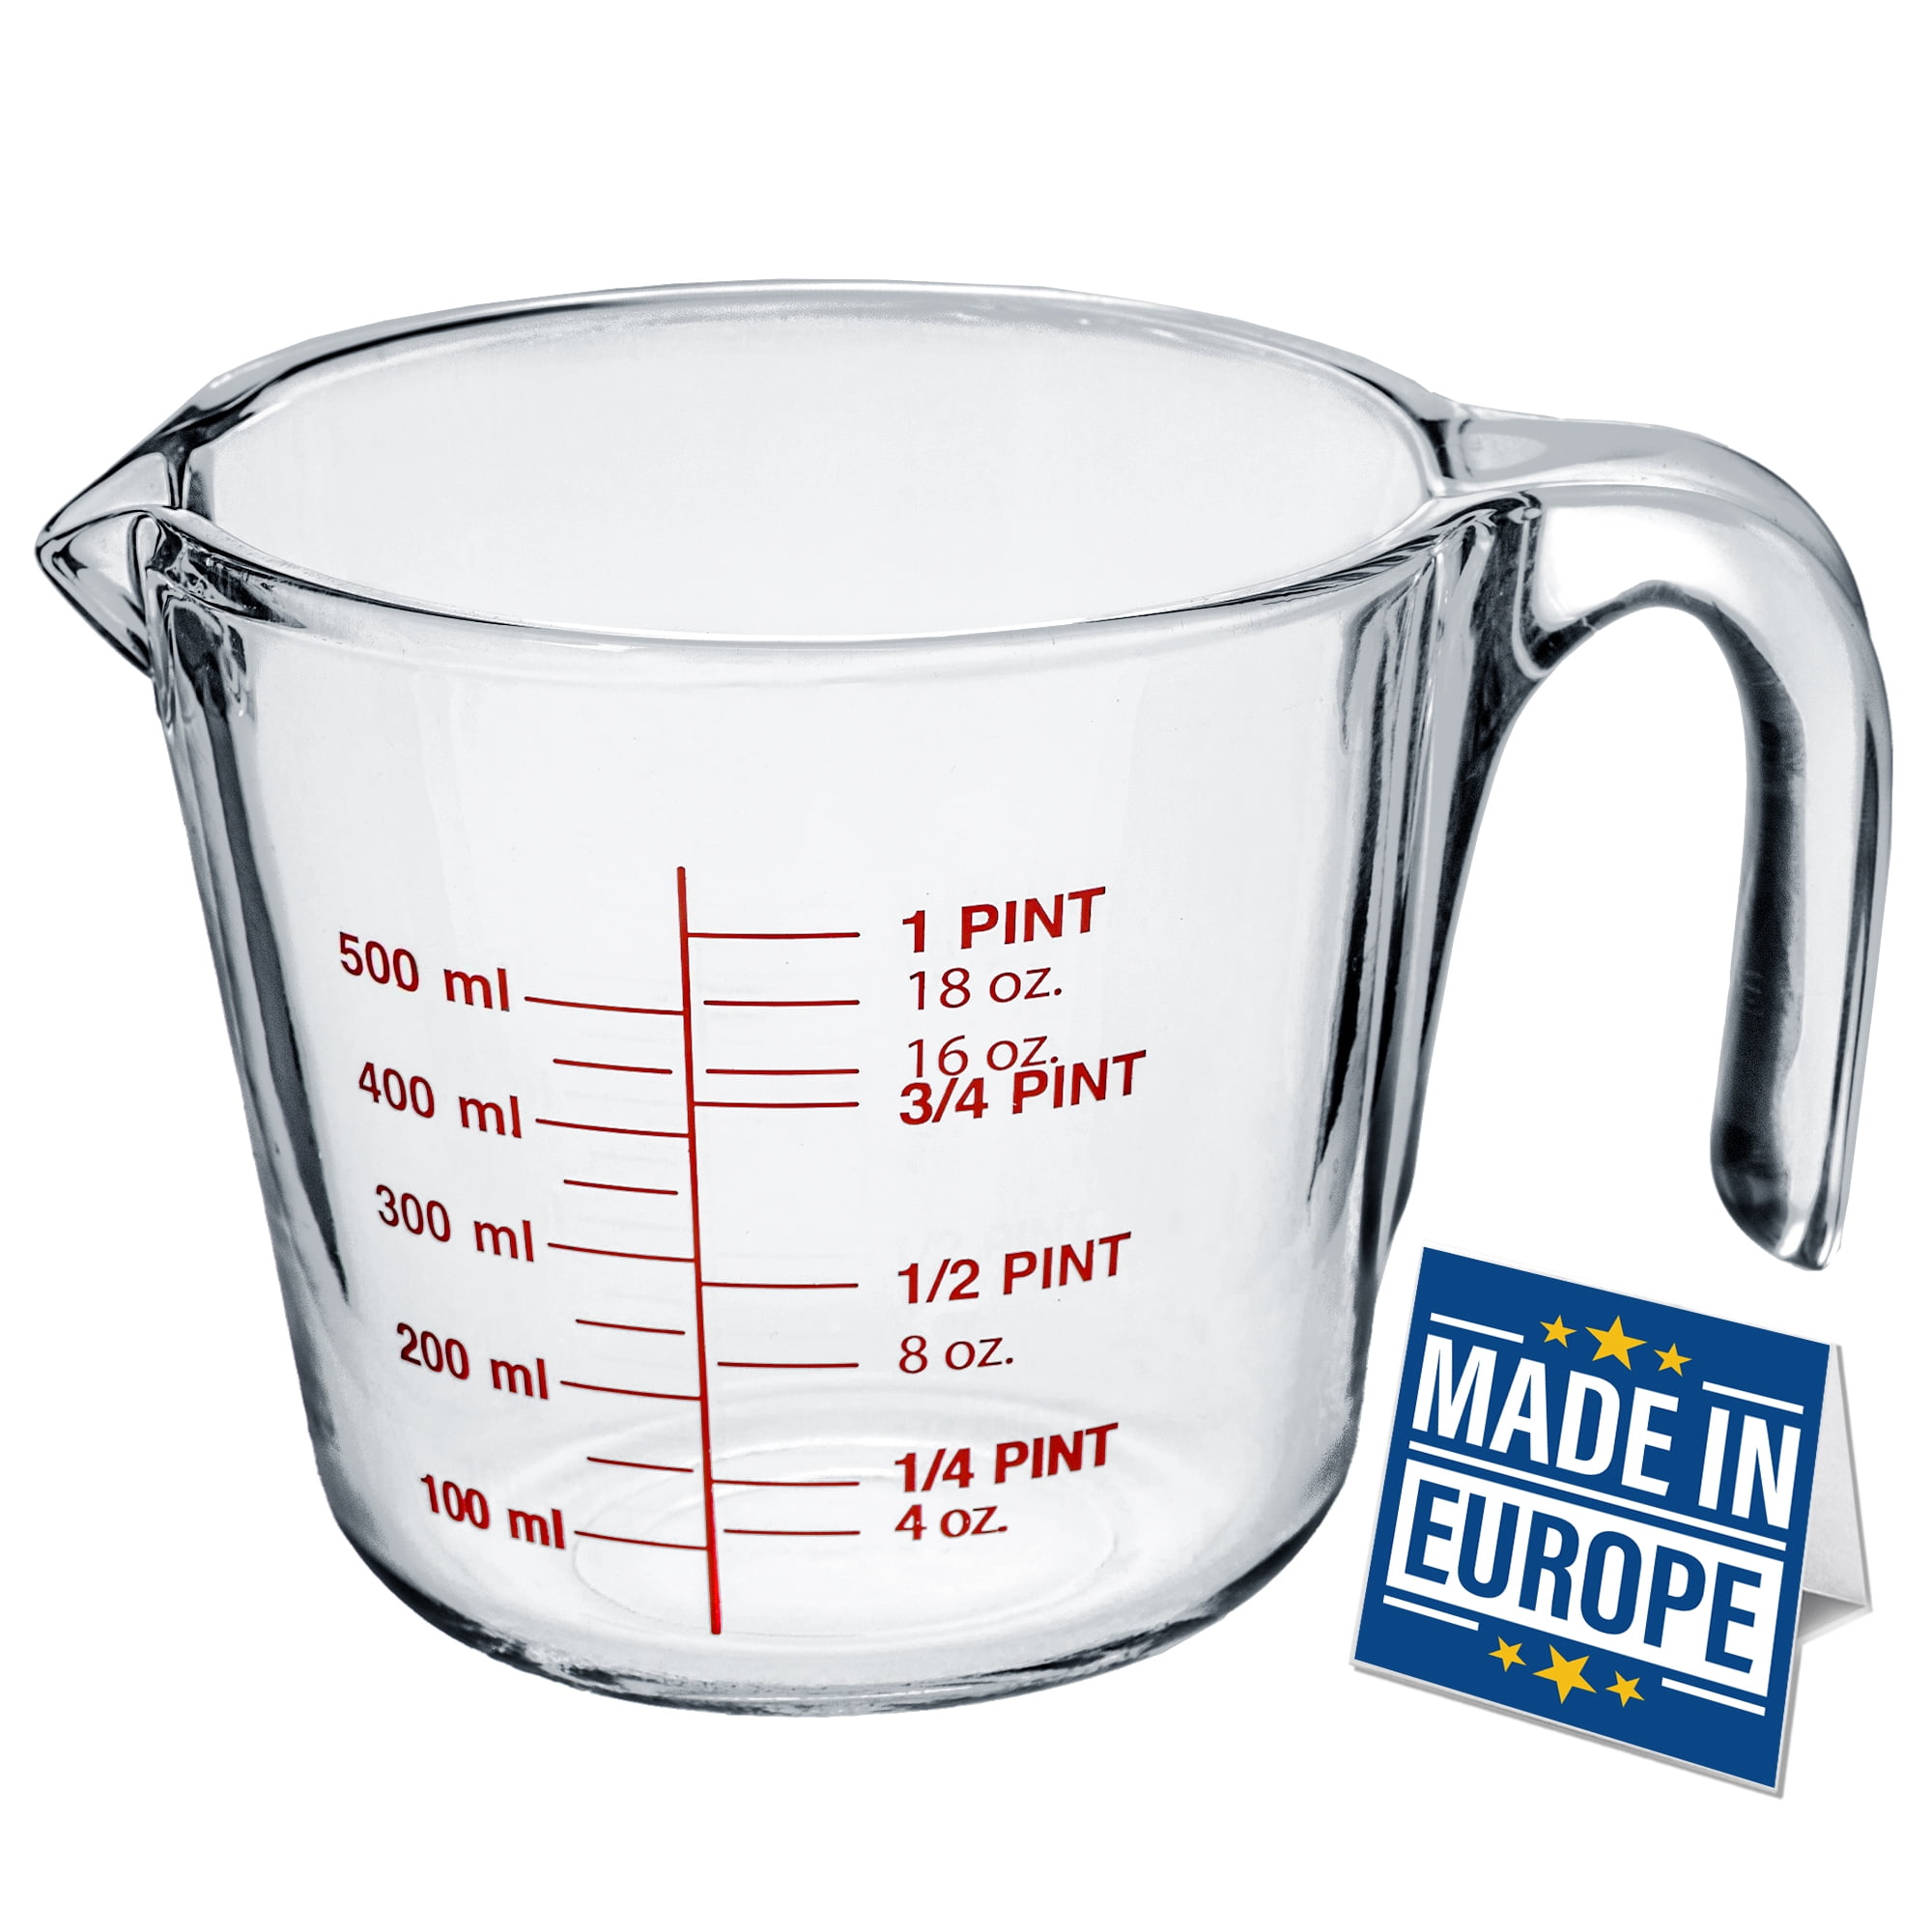 Simax Glass Measuring Cups in Grams, Borosilicate Glass Ml Measuring Cup,  32 Oz Liquid Measuring Cup Glass for Metric Measurements, Liter, Milliliter,  Ounce, Sugar & Flour Grams, No Drip Pour Spout 